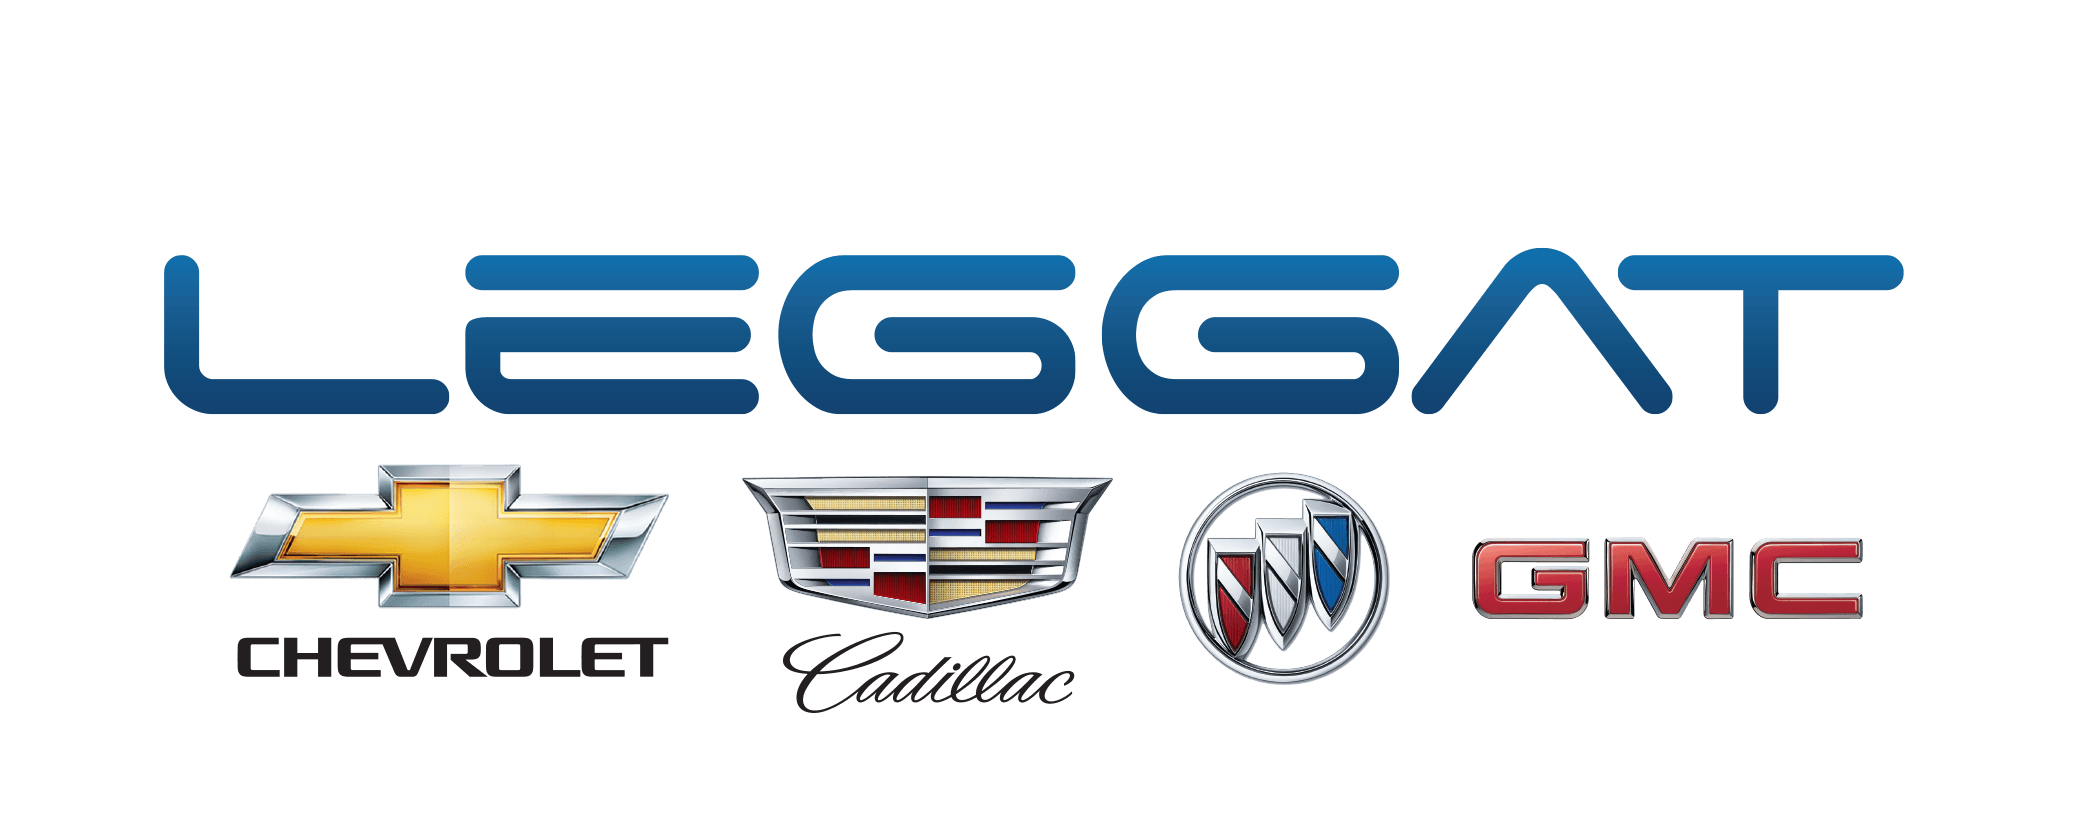 Certified Cadillac Logo - Burlington 2015 Cadillac ATS Sedan: Certified Car